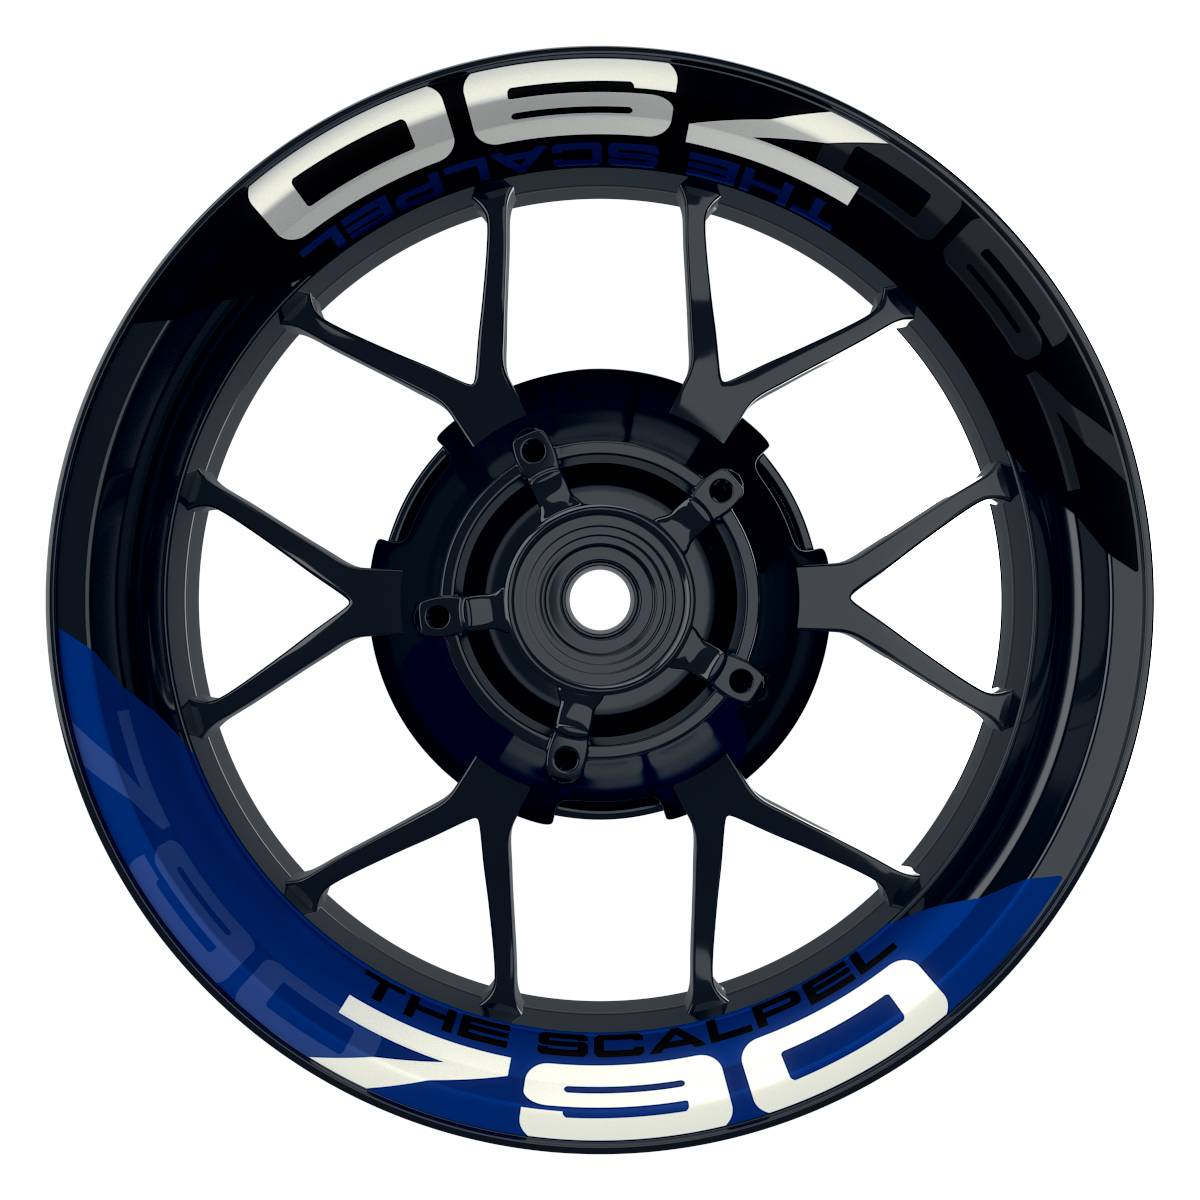 Wheelsticker Felgenaufkleber THE SCALPEL 790 Supermoto halb halb V2 schwarz blau Frontansicht